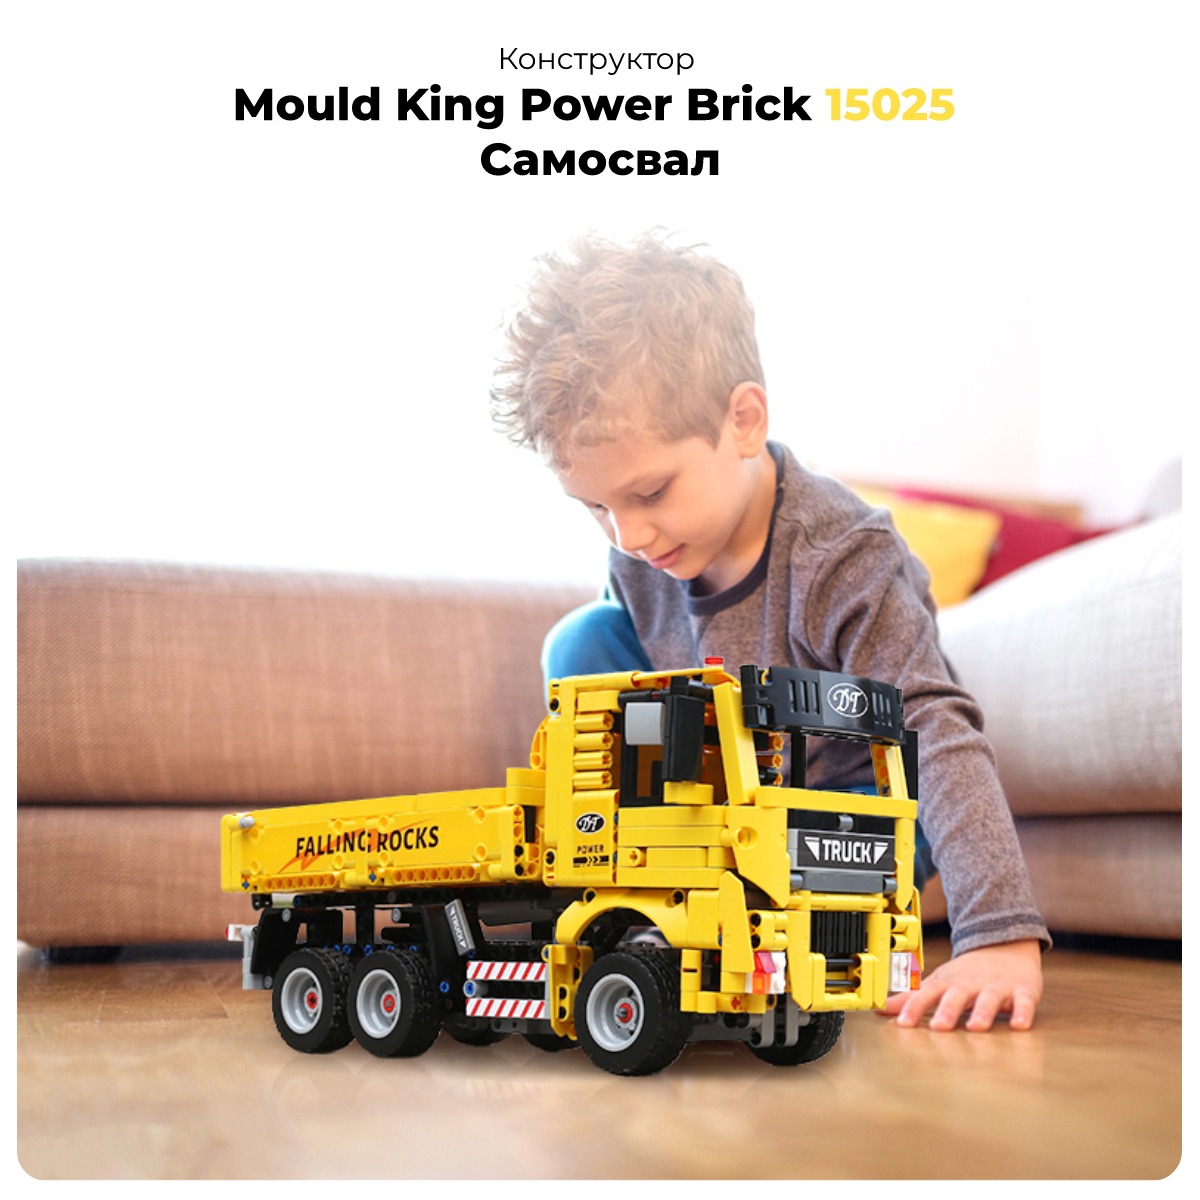 Mould-King-Power-Brick-15025-01